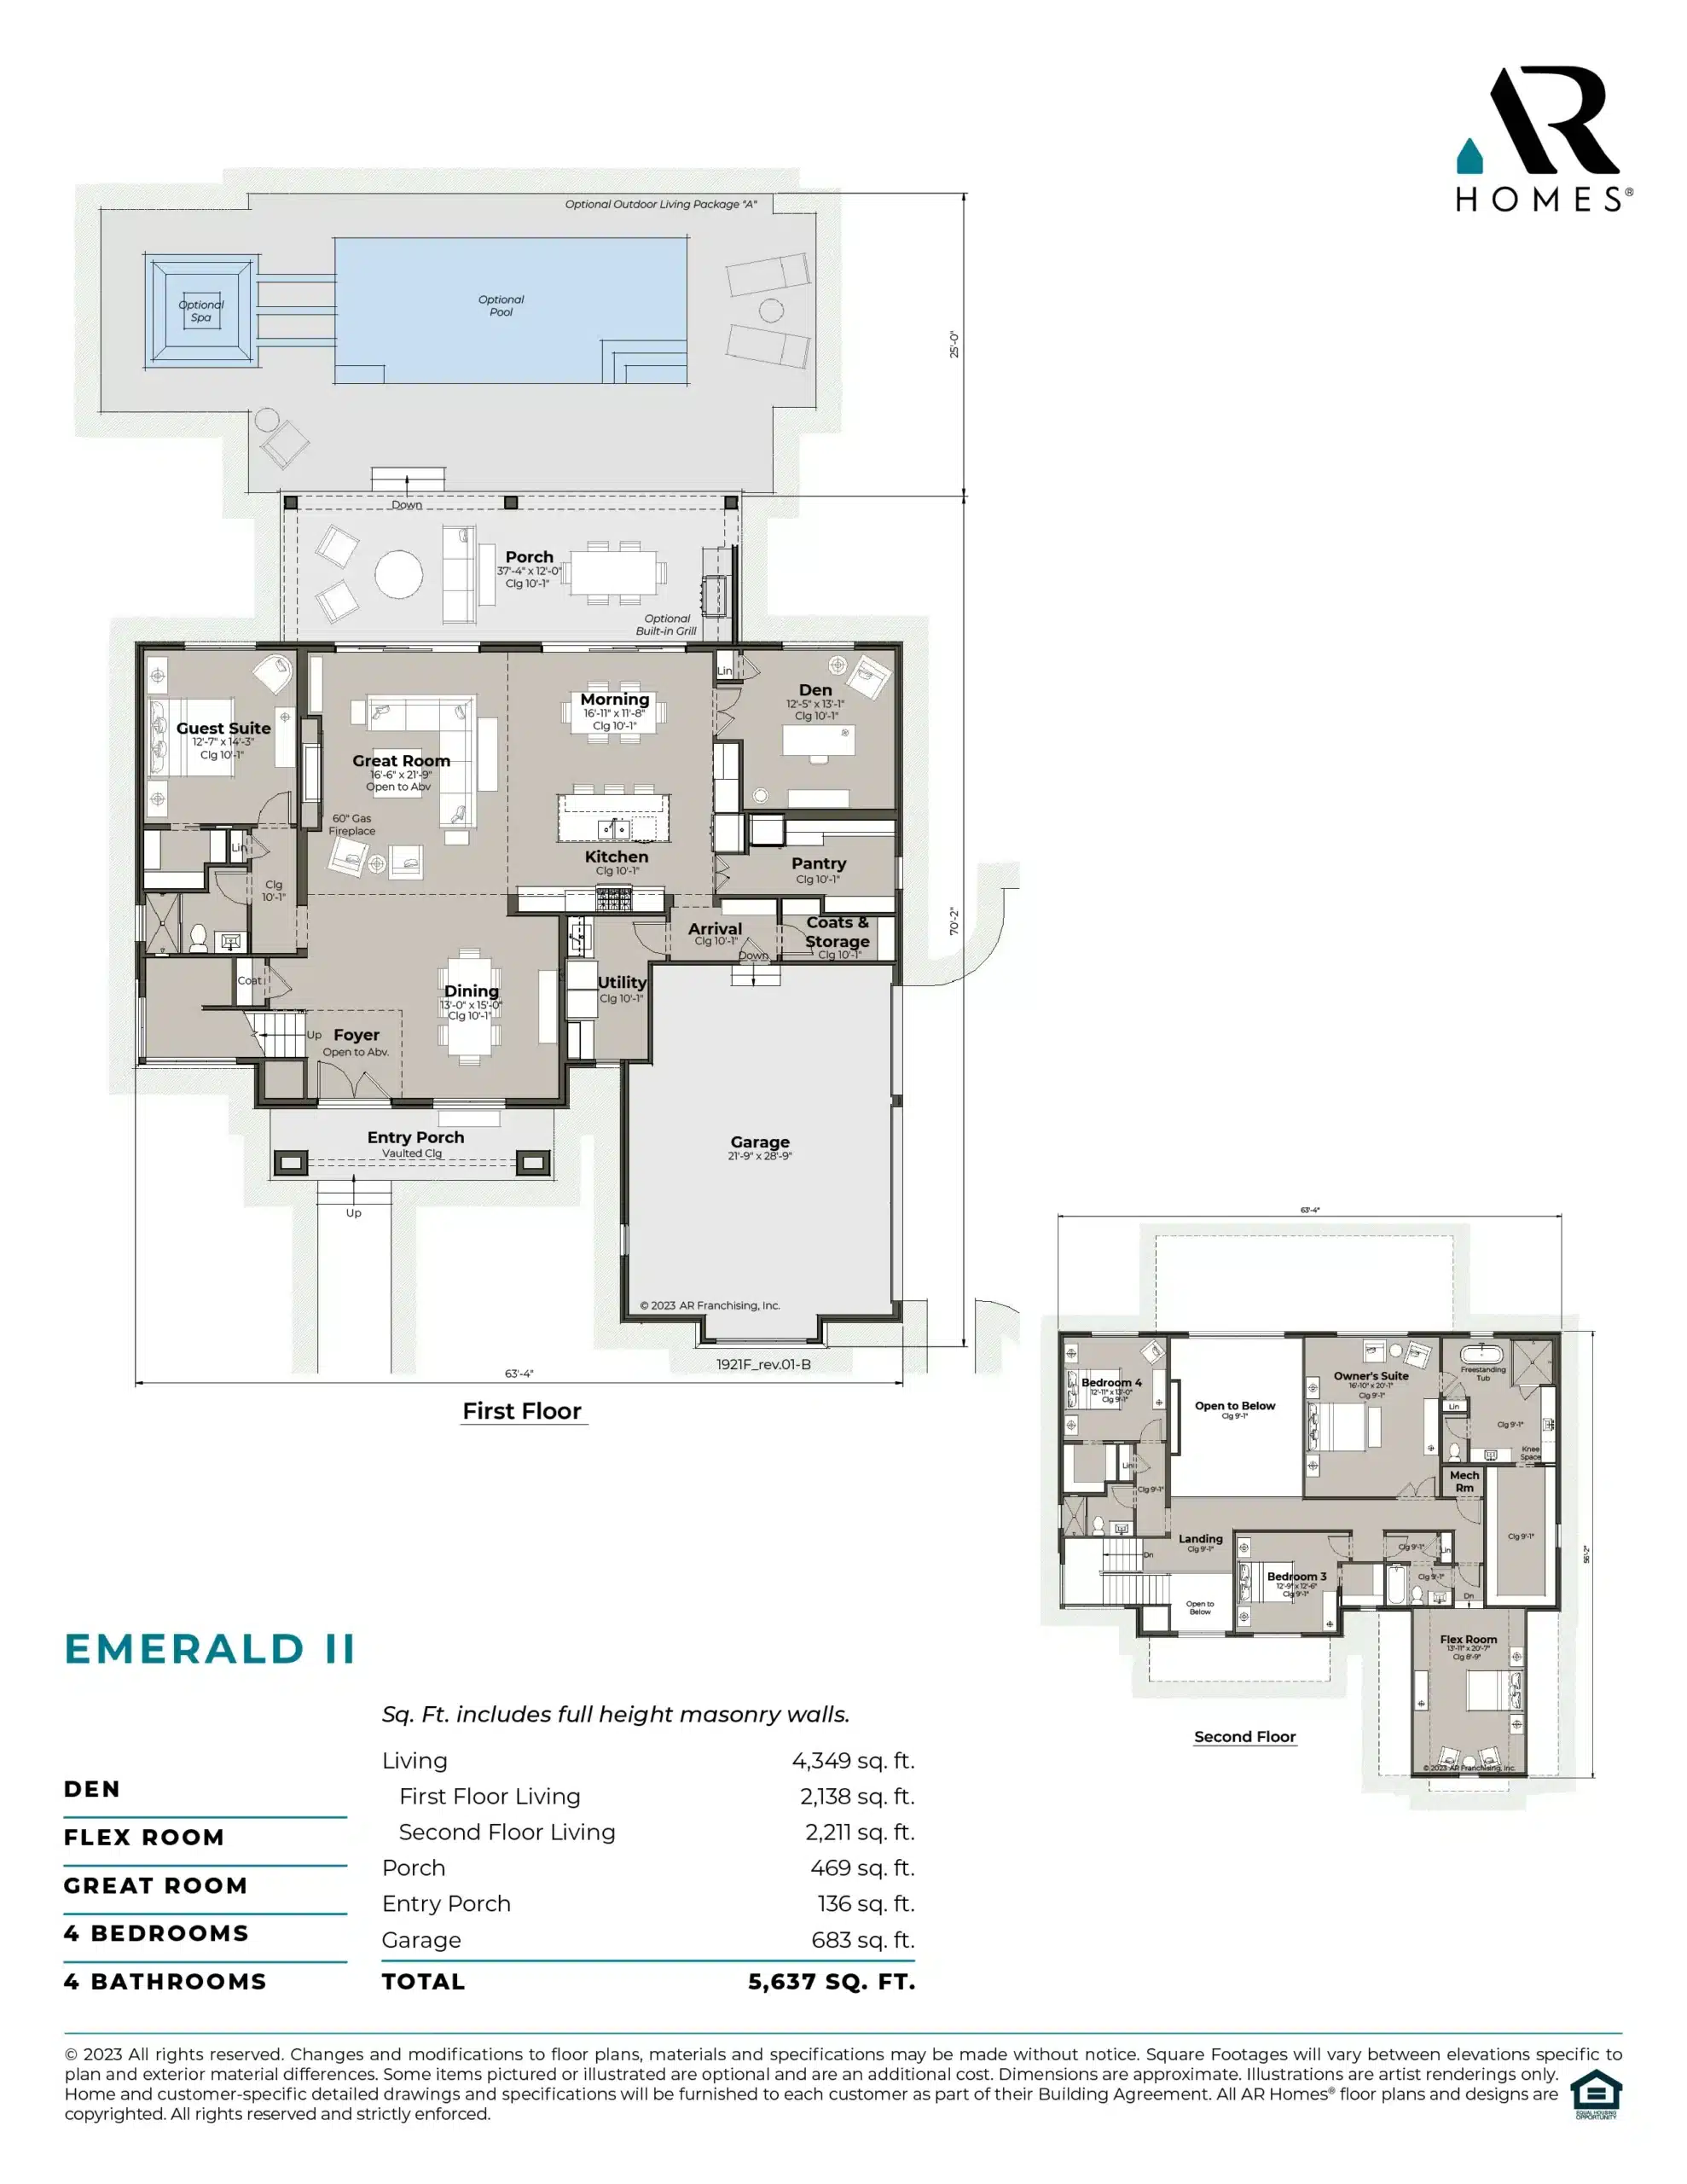 Custom Home Floor Plan